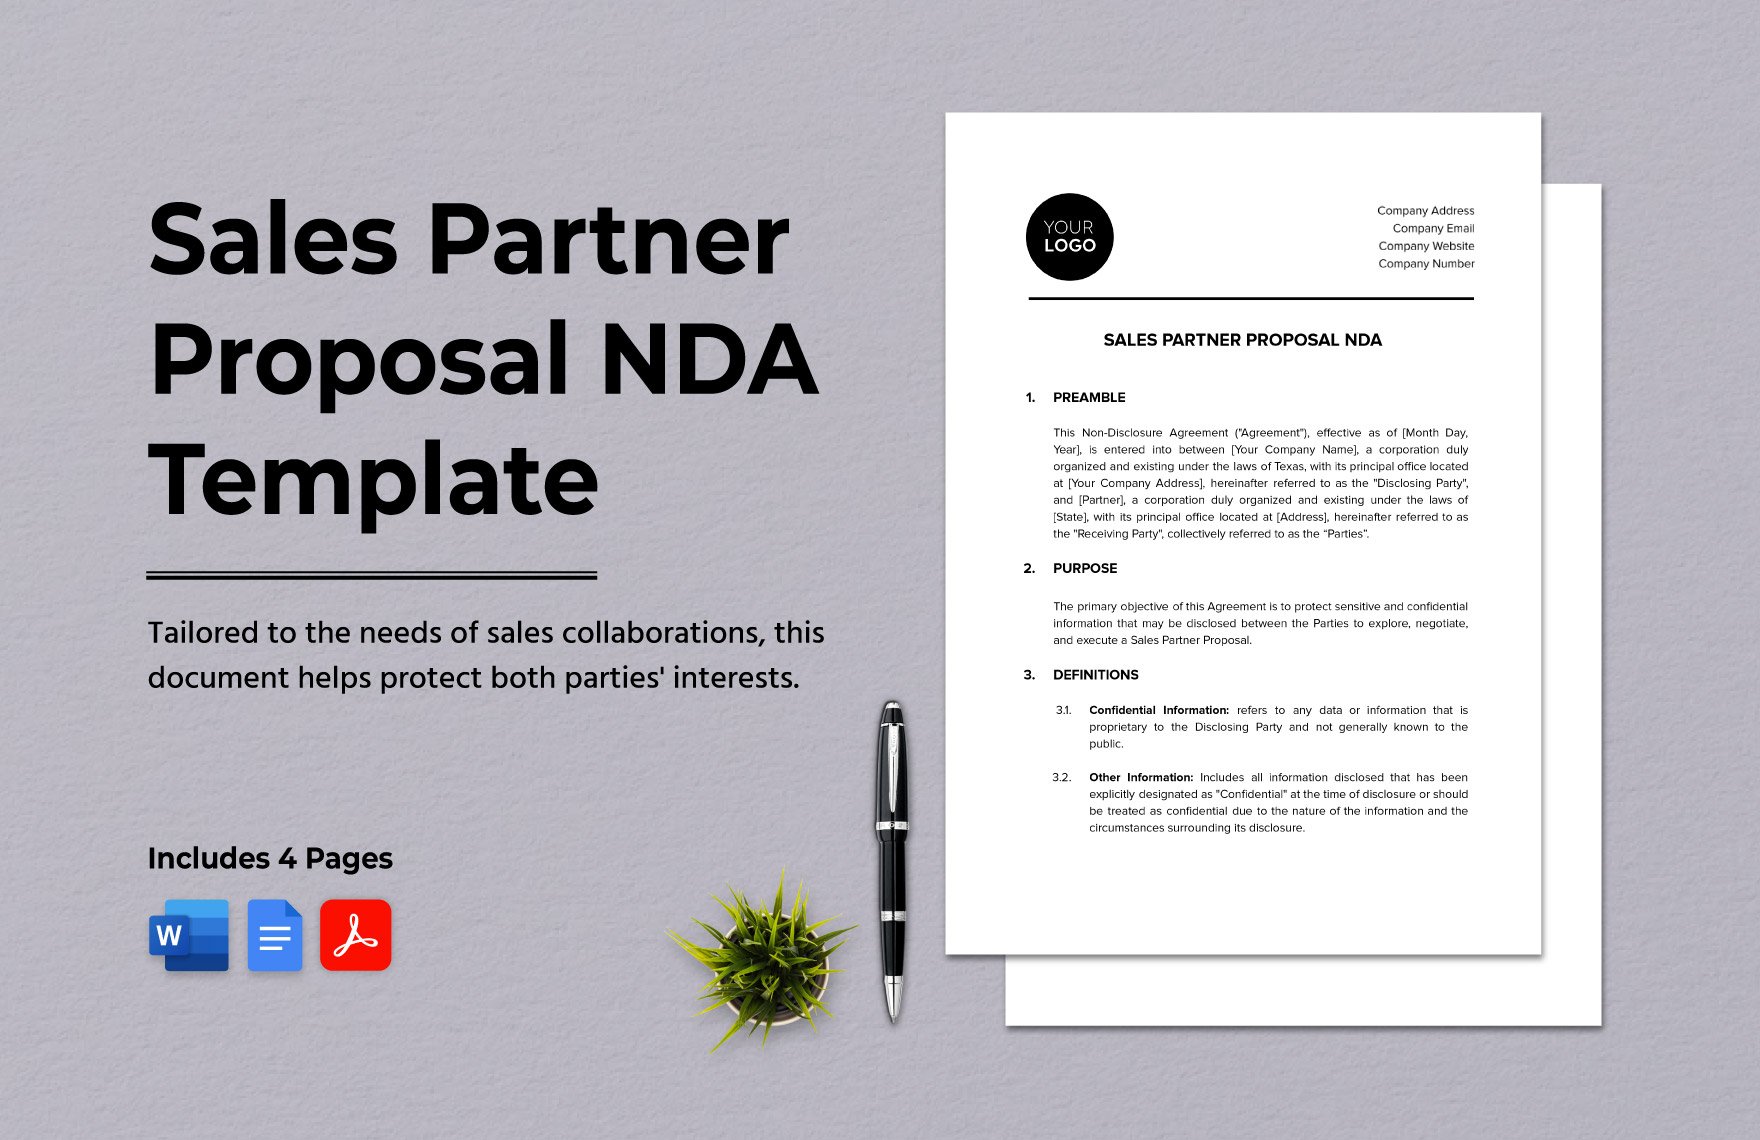 Sales Partner Proposal NDA Template